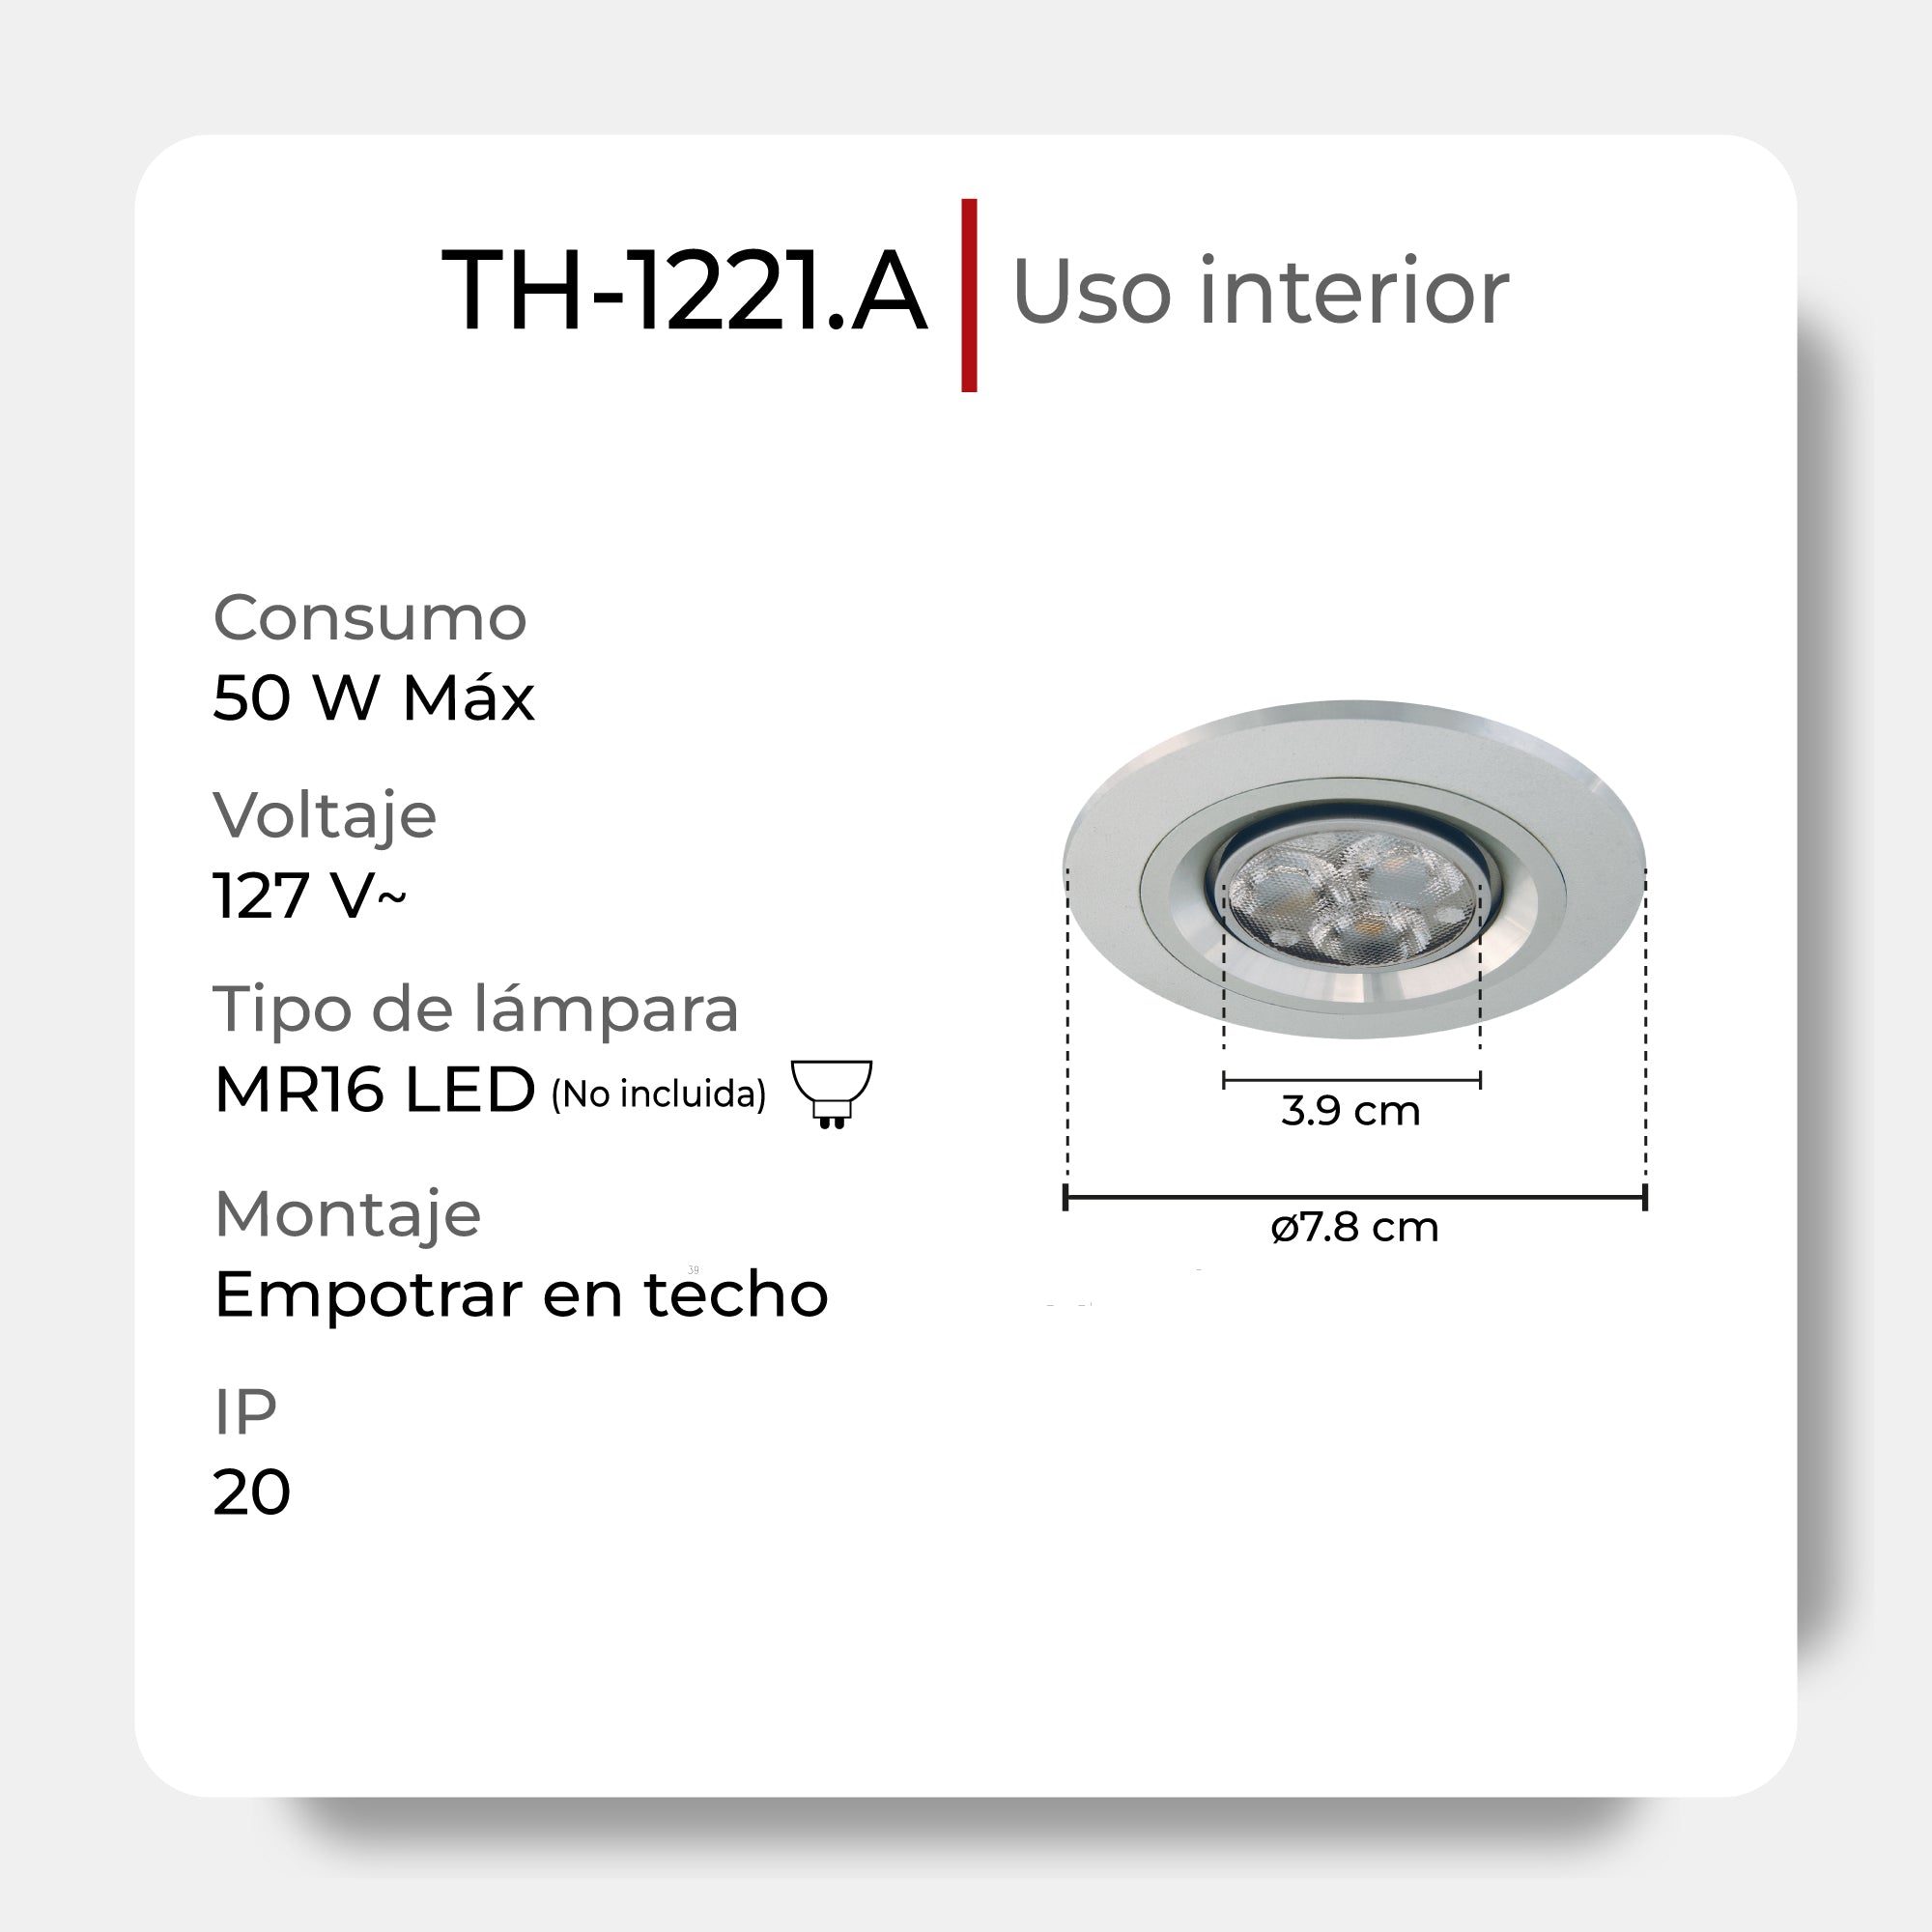 Luminario Illux empotrar para techo downlight redondo, TH-1221.A Illux